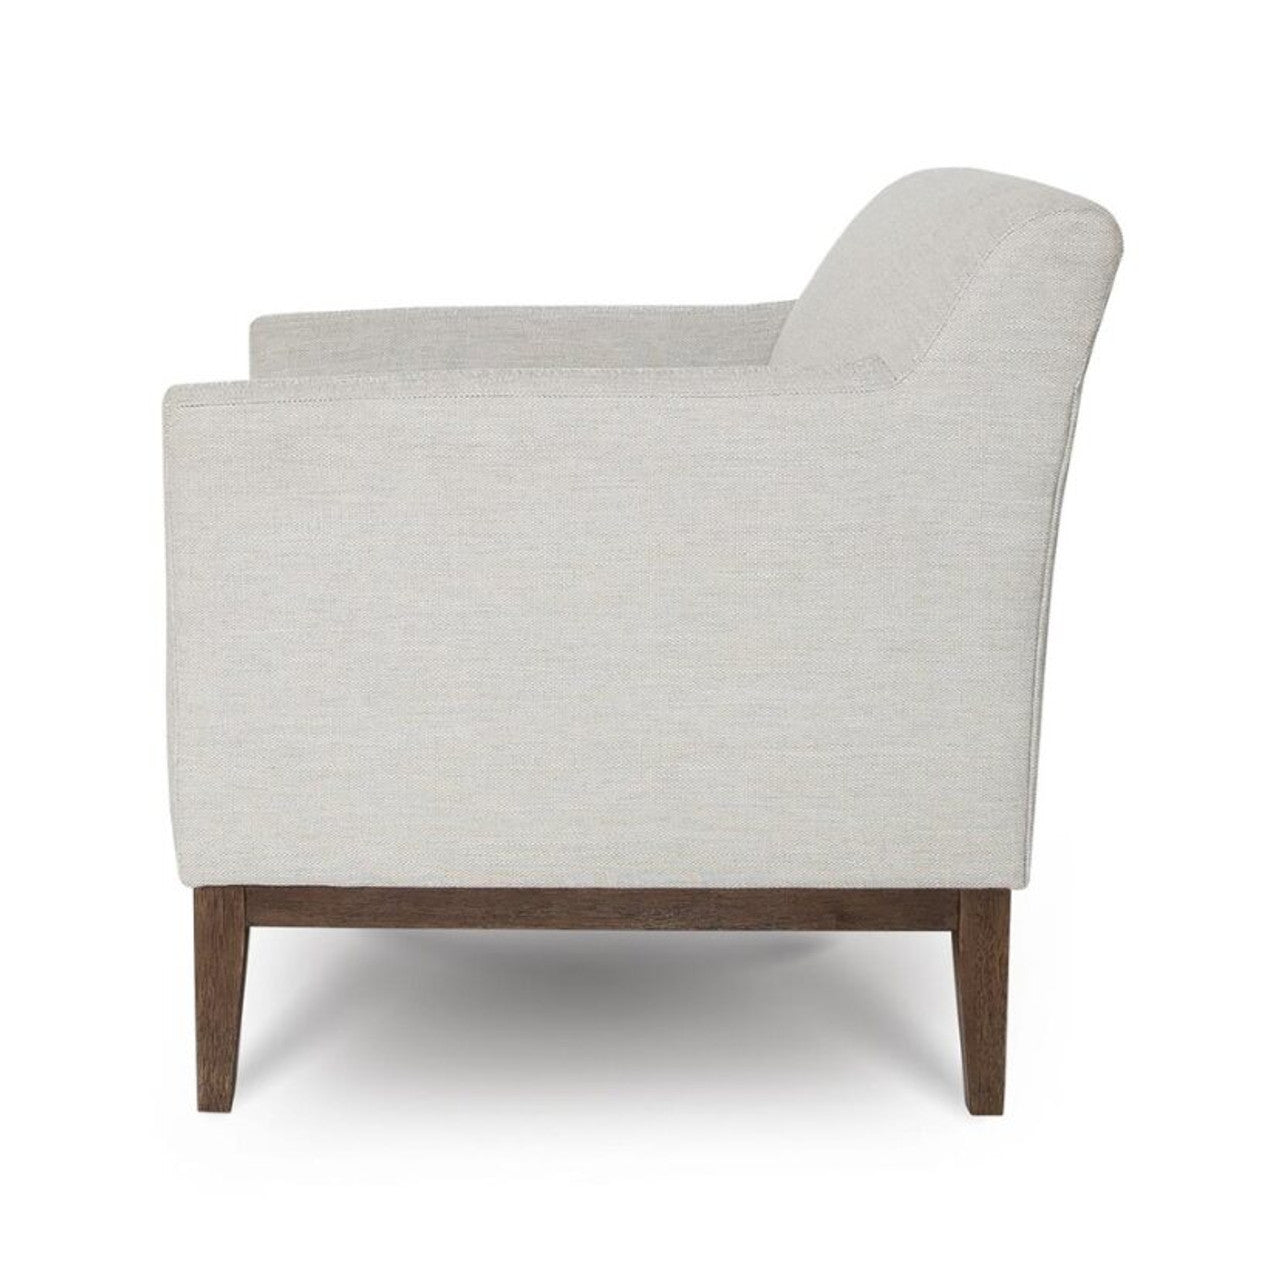 Ezra Chair - Sand